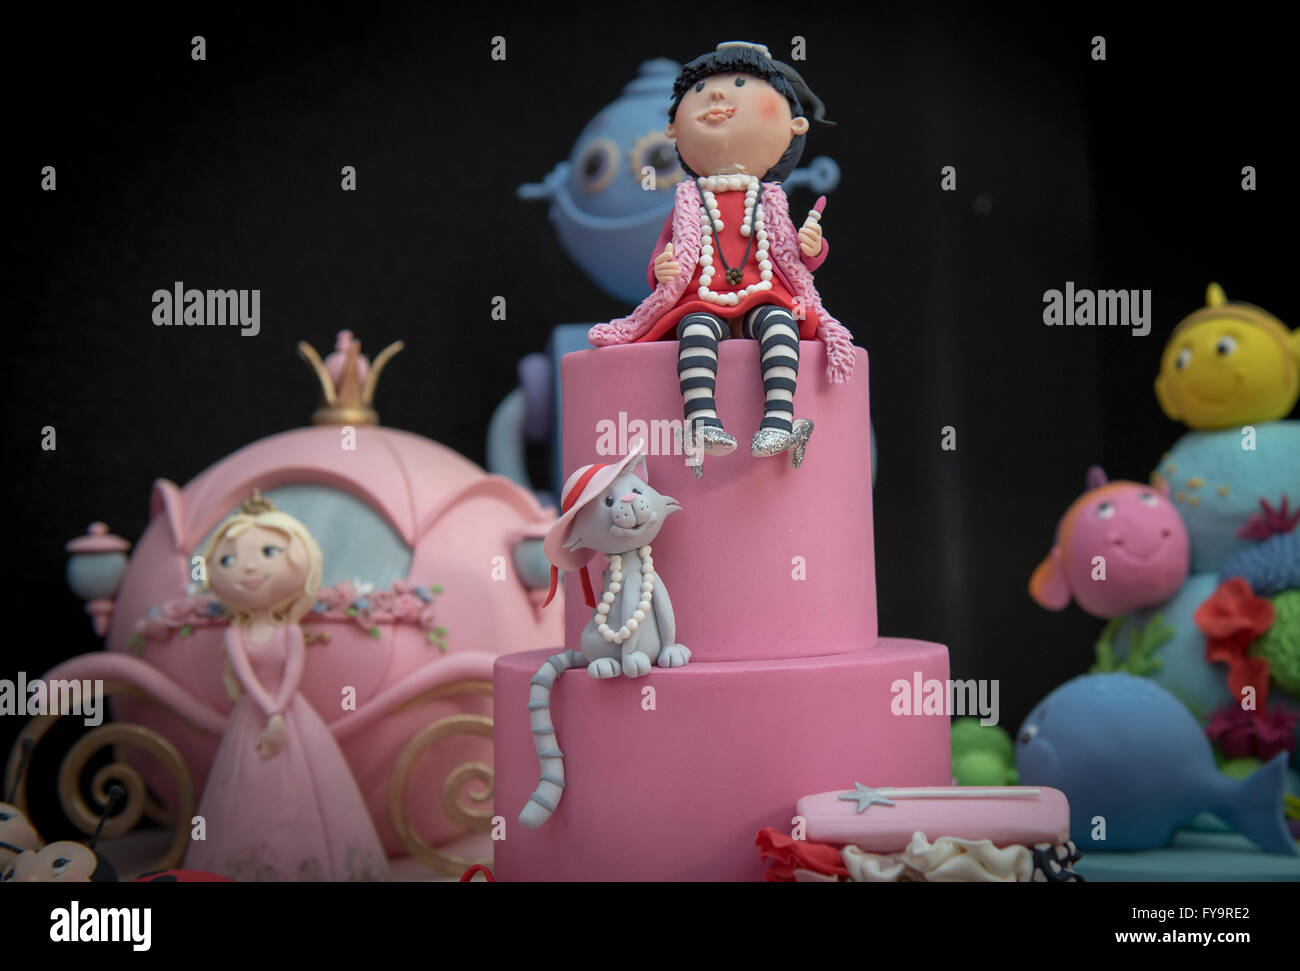 Girl cat and princess edible cake decorations at Cake